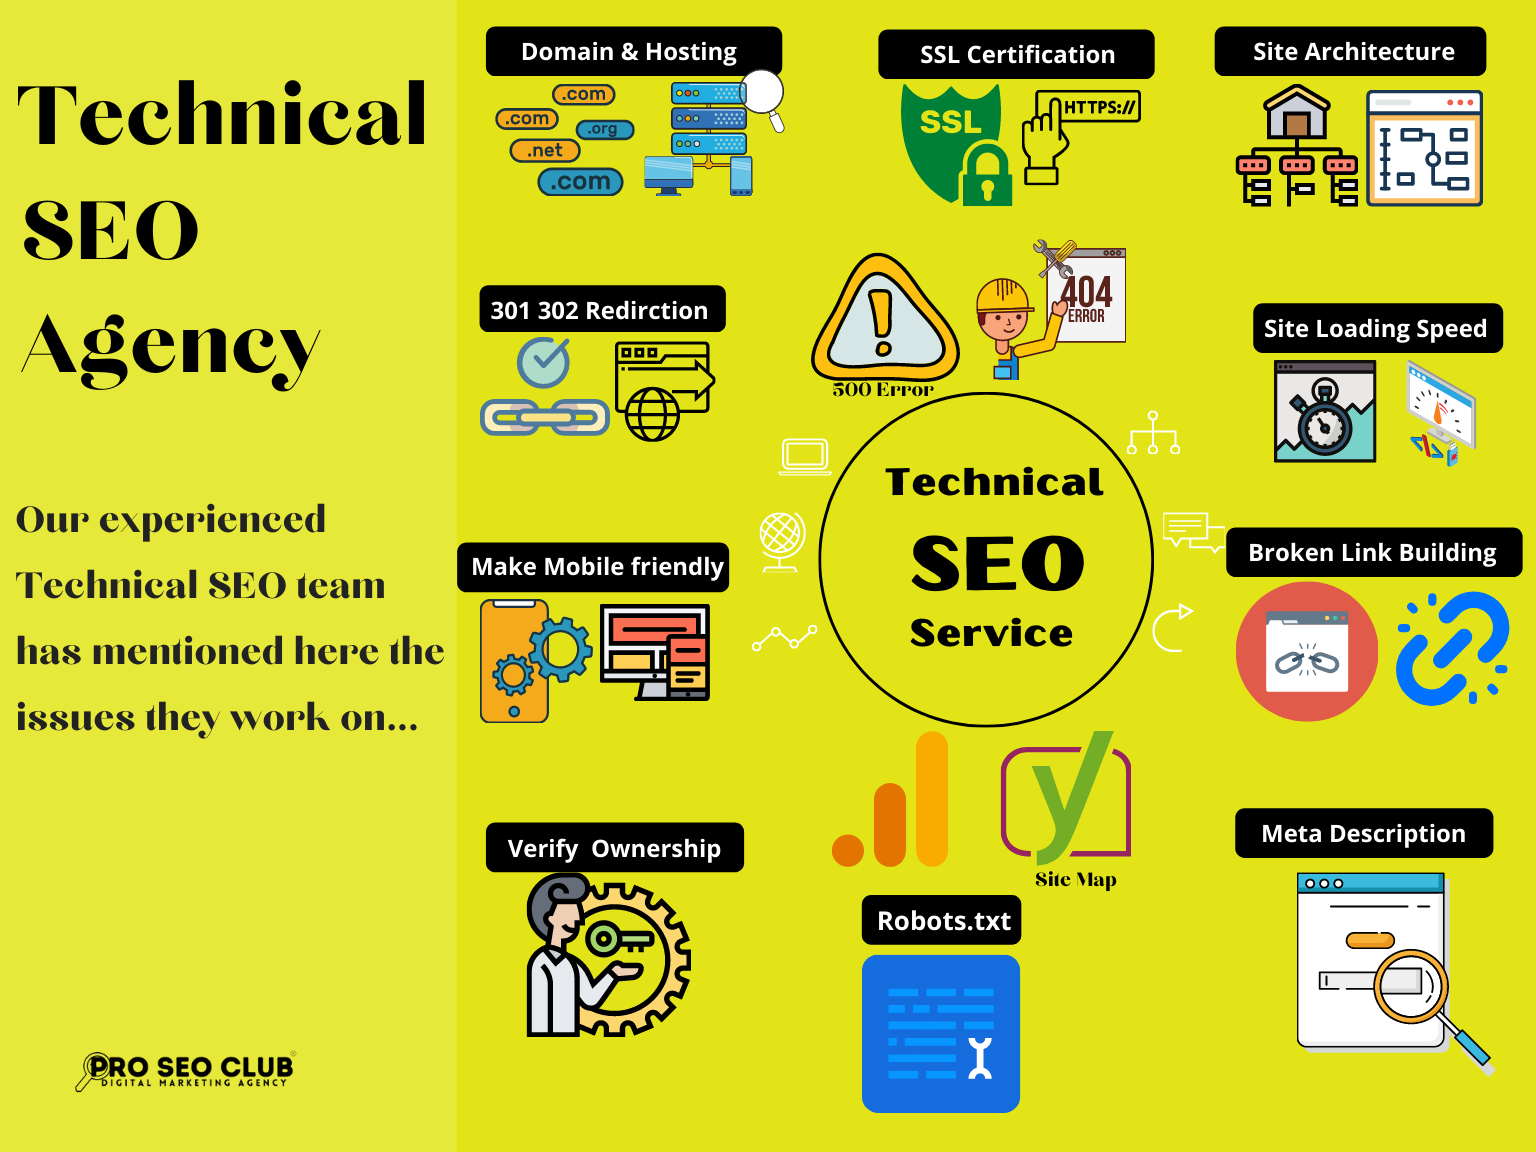 Pro SEO Club Technical Seo Agency